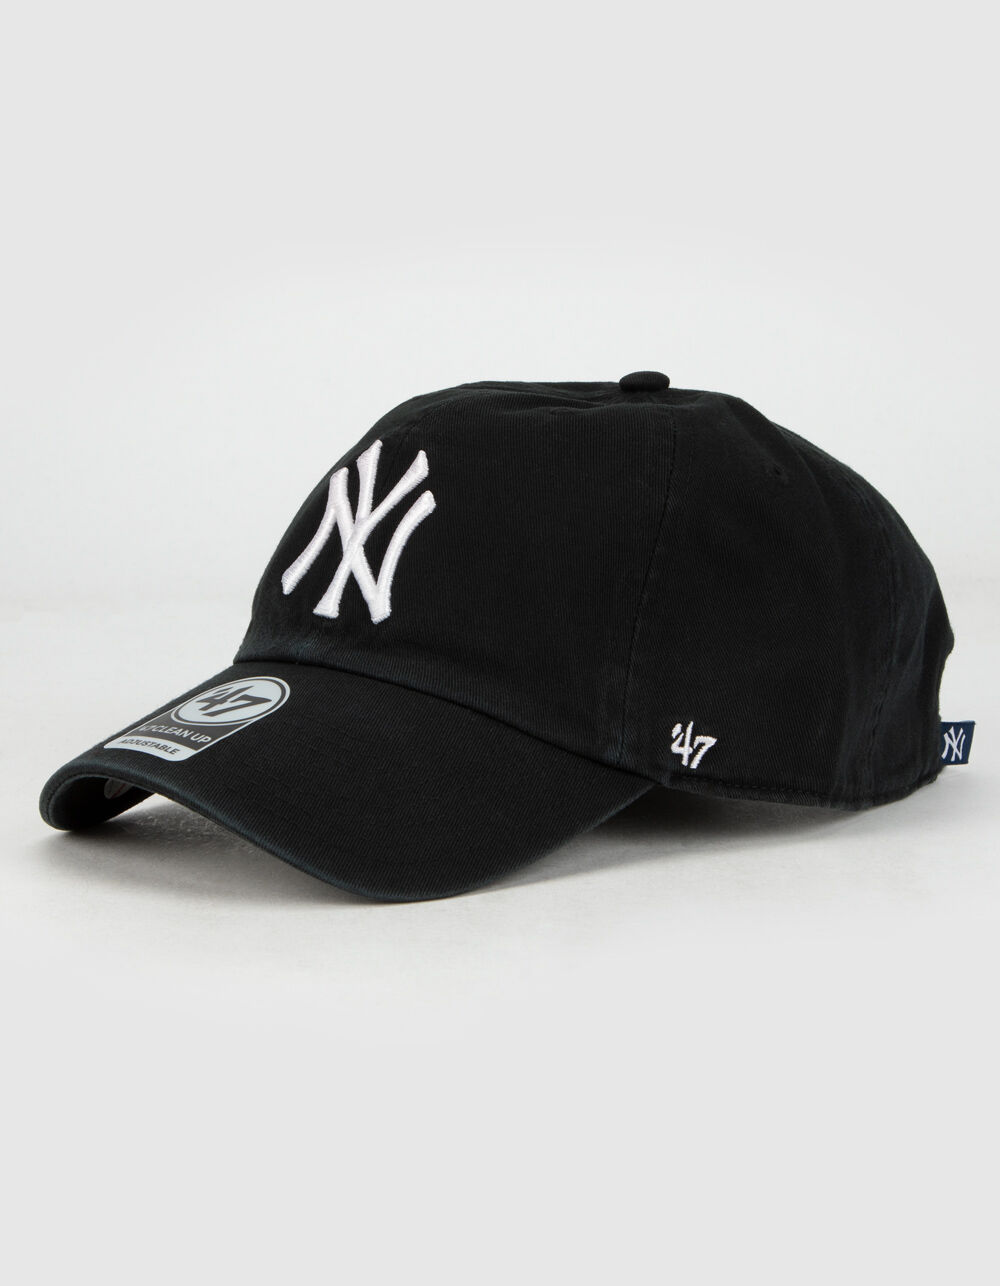 47 Brand New York Yankees Black White Clean Up Cap - Black